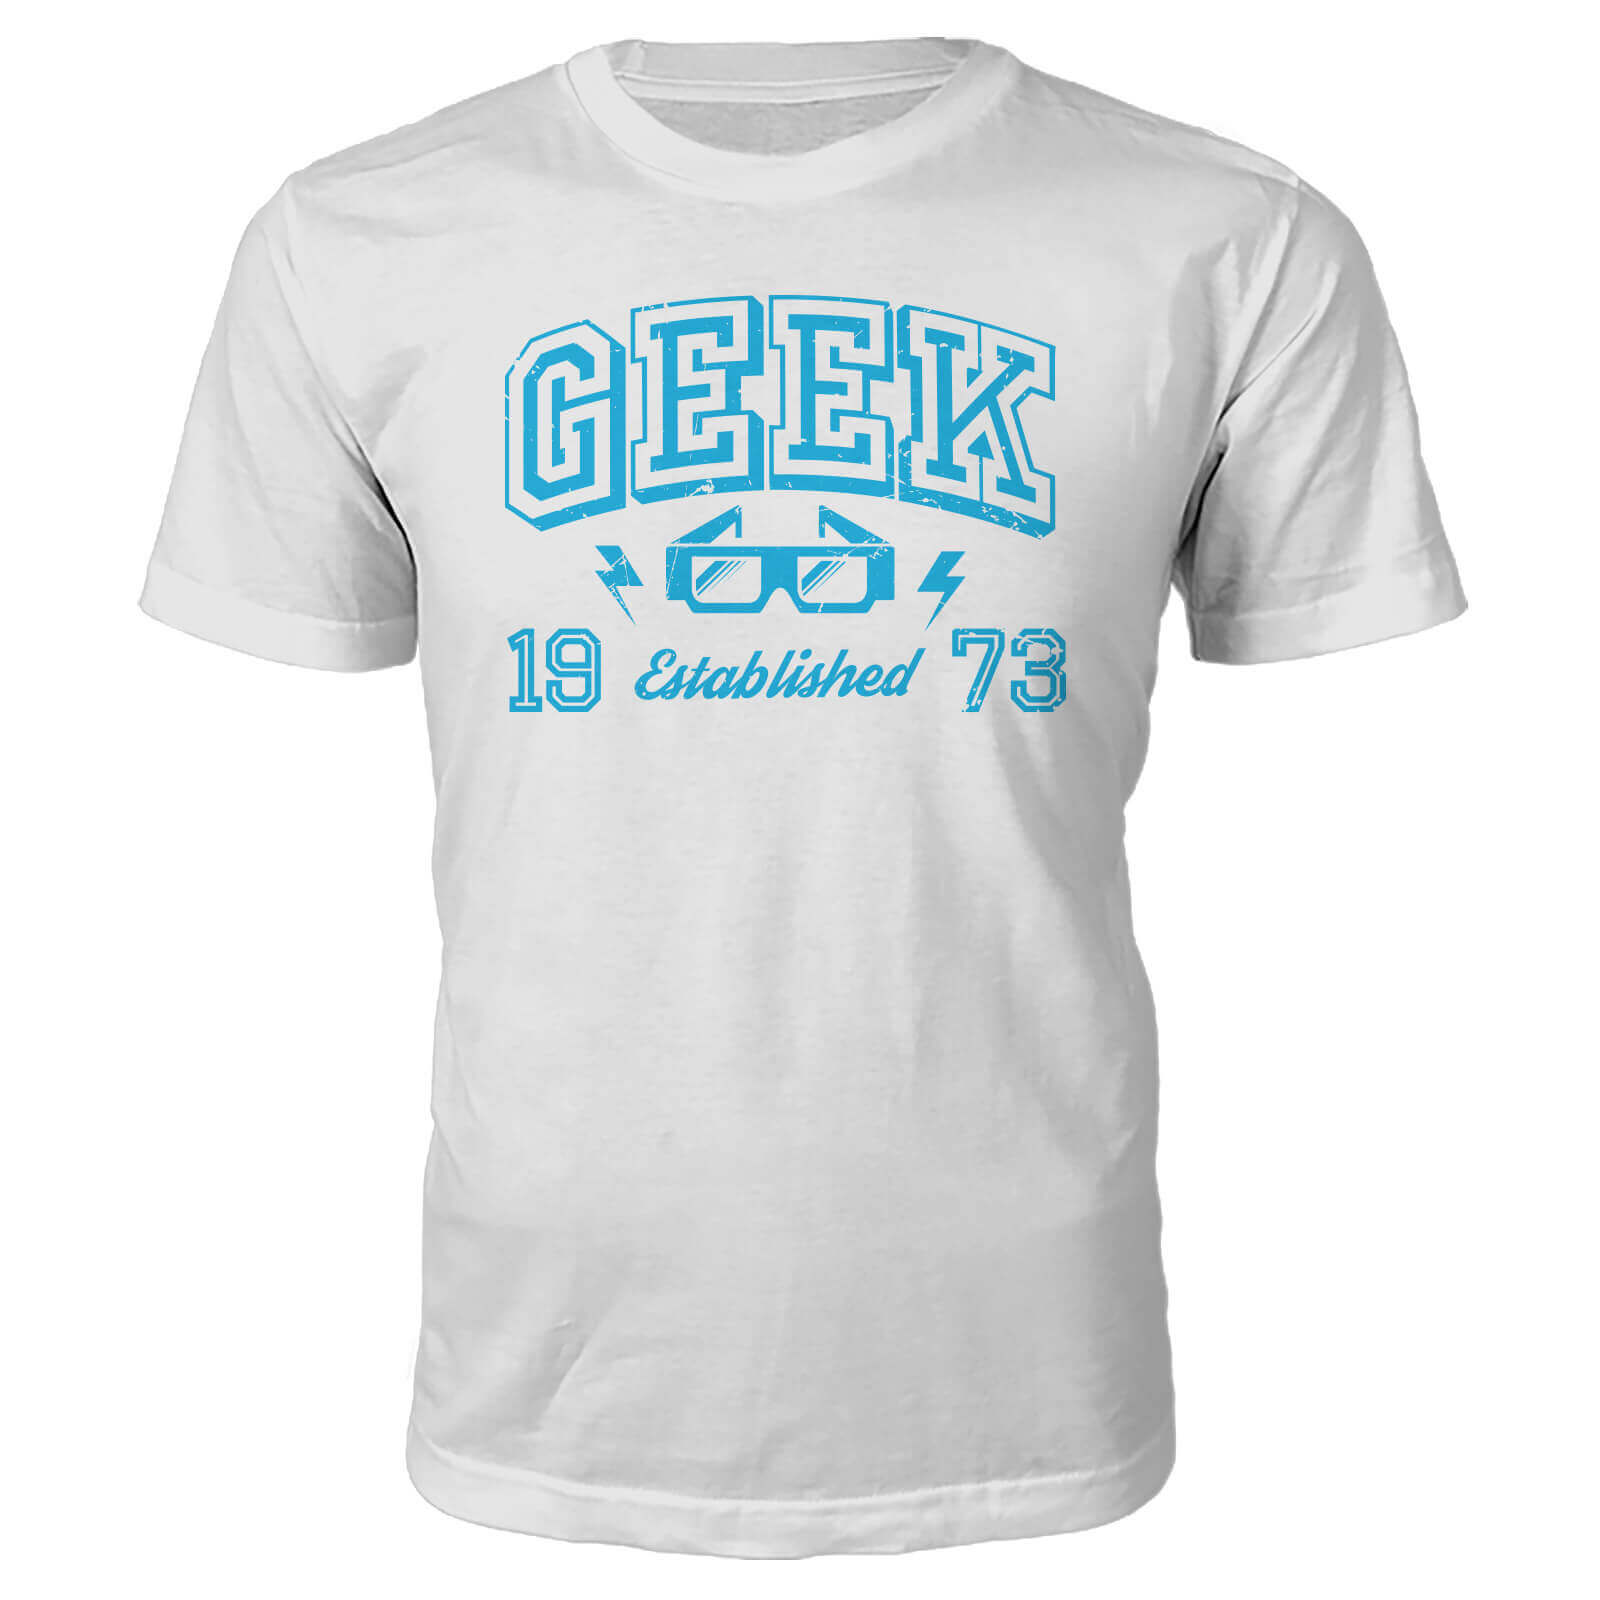 Geek Established 1970's T-Shirt- White - S - 1973